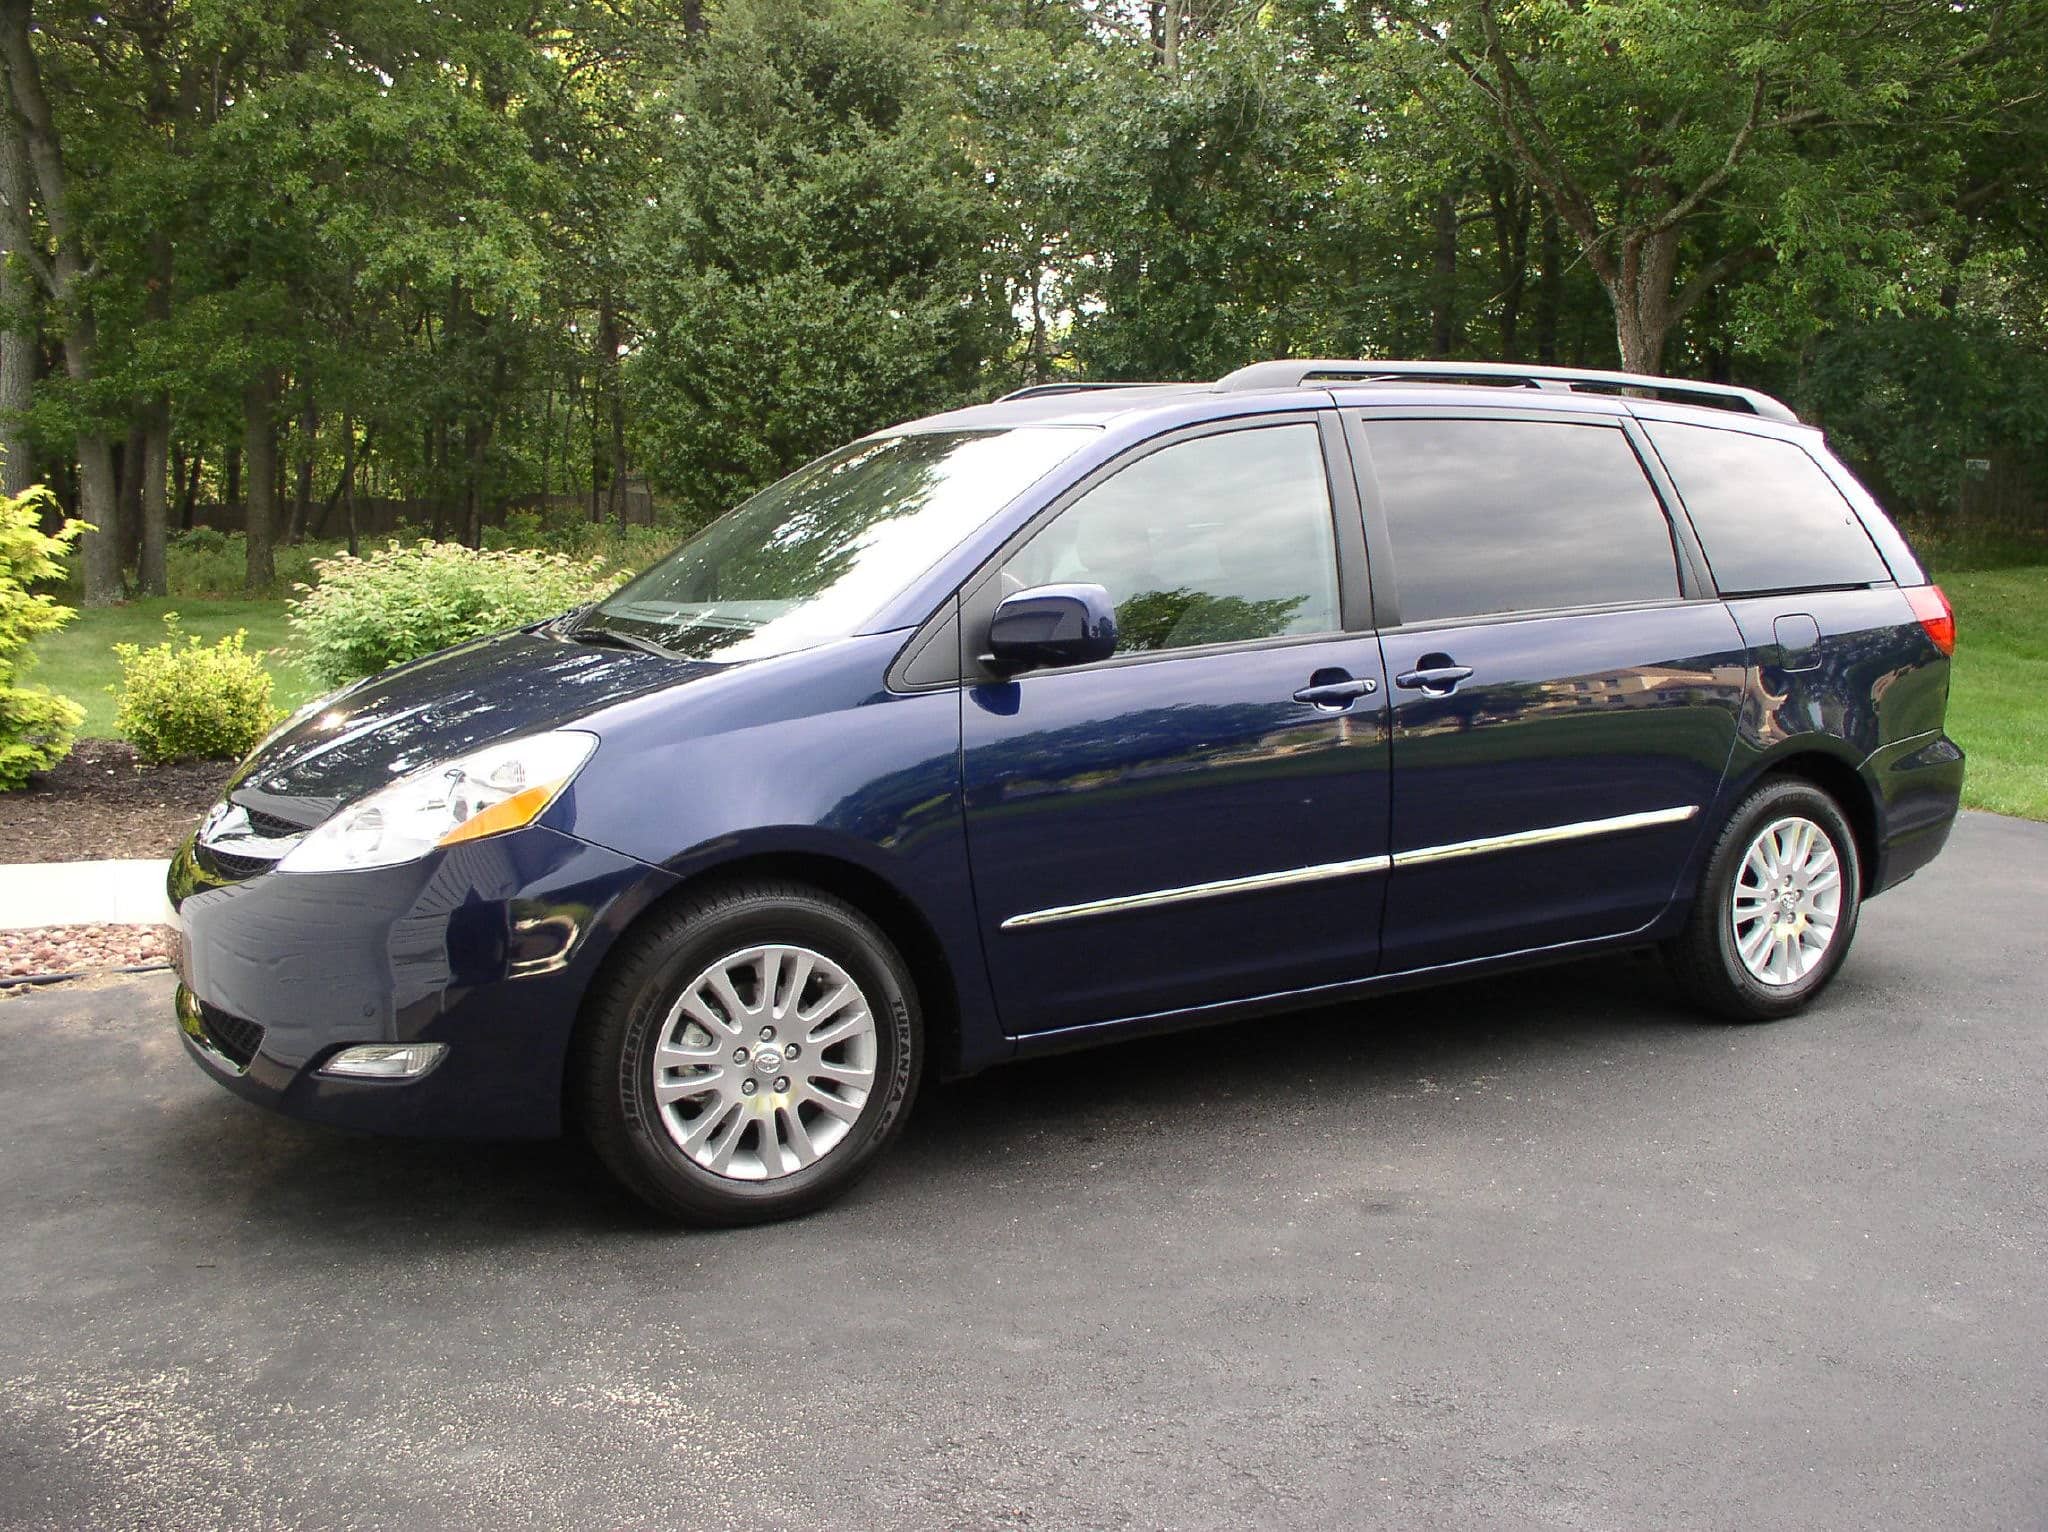 Why Rent a Minivan from ABC Auto Van & RV Rental?